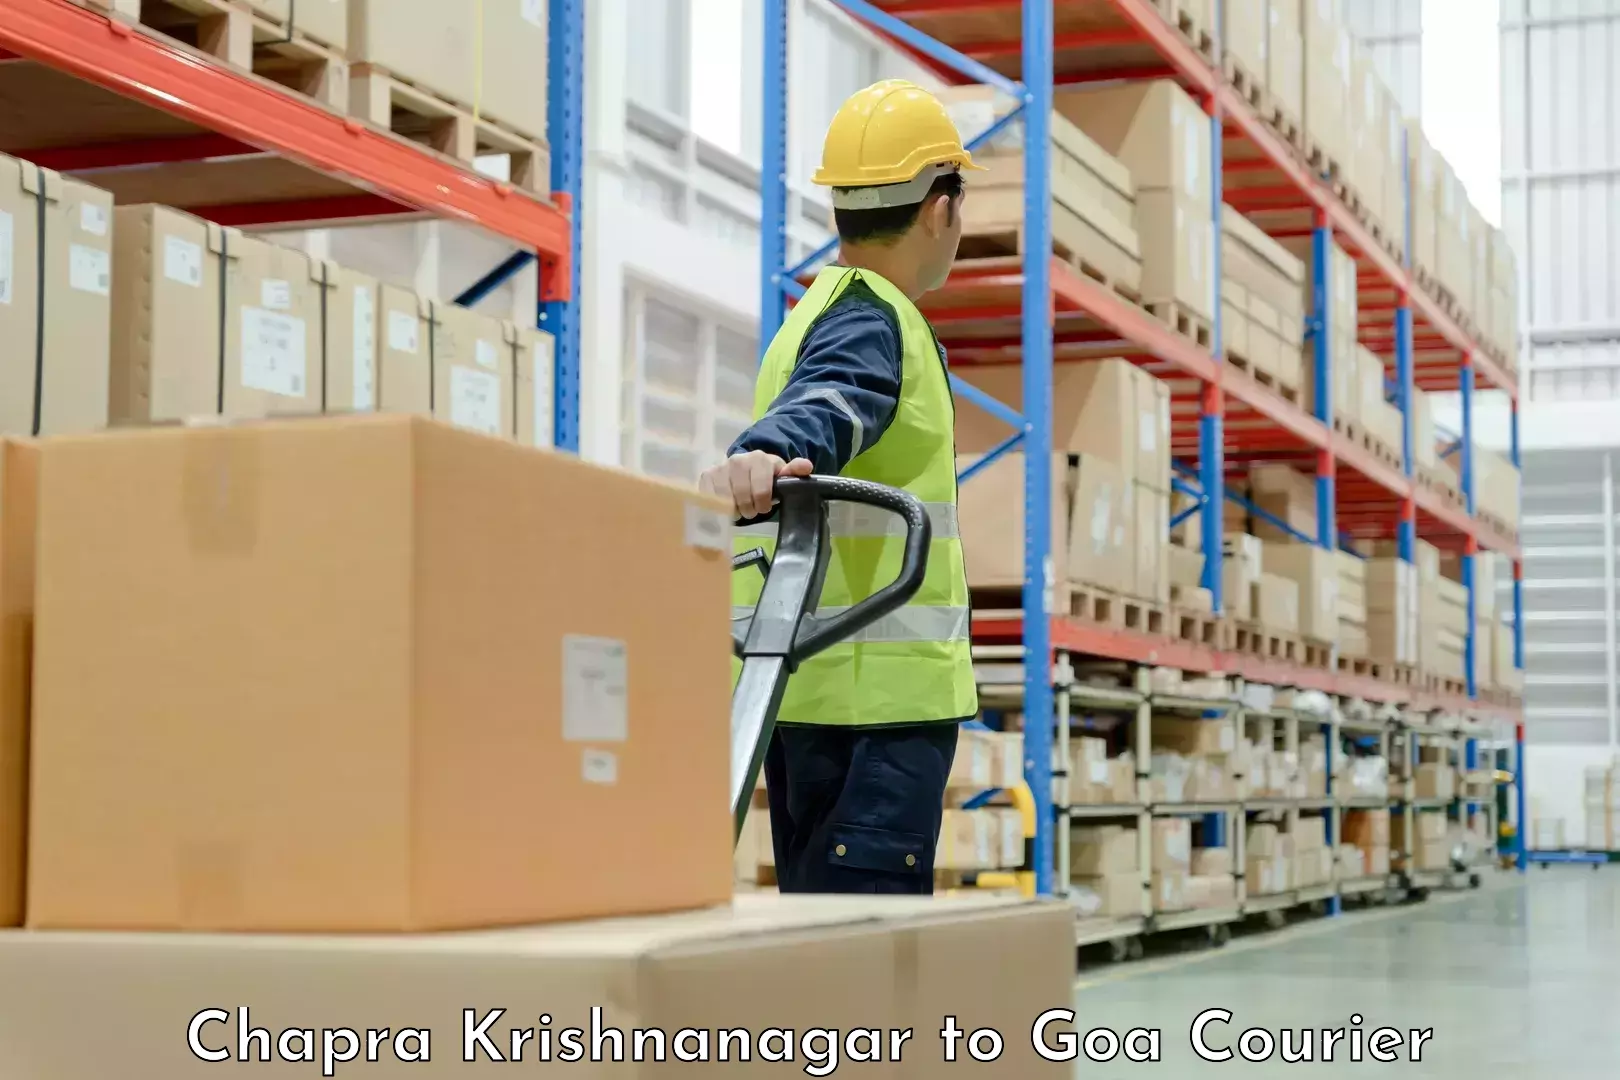 Professional furniture movers Chapra Krishnanagar to Panaji